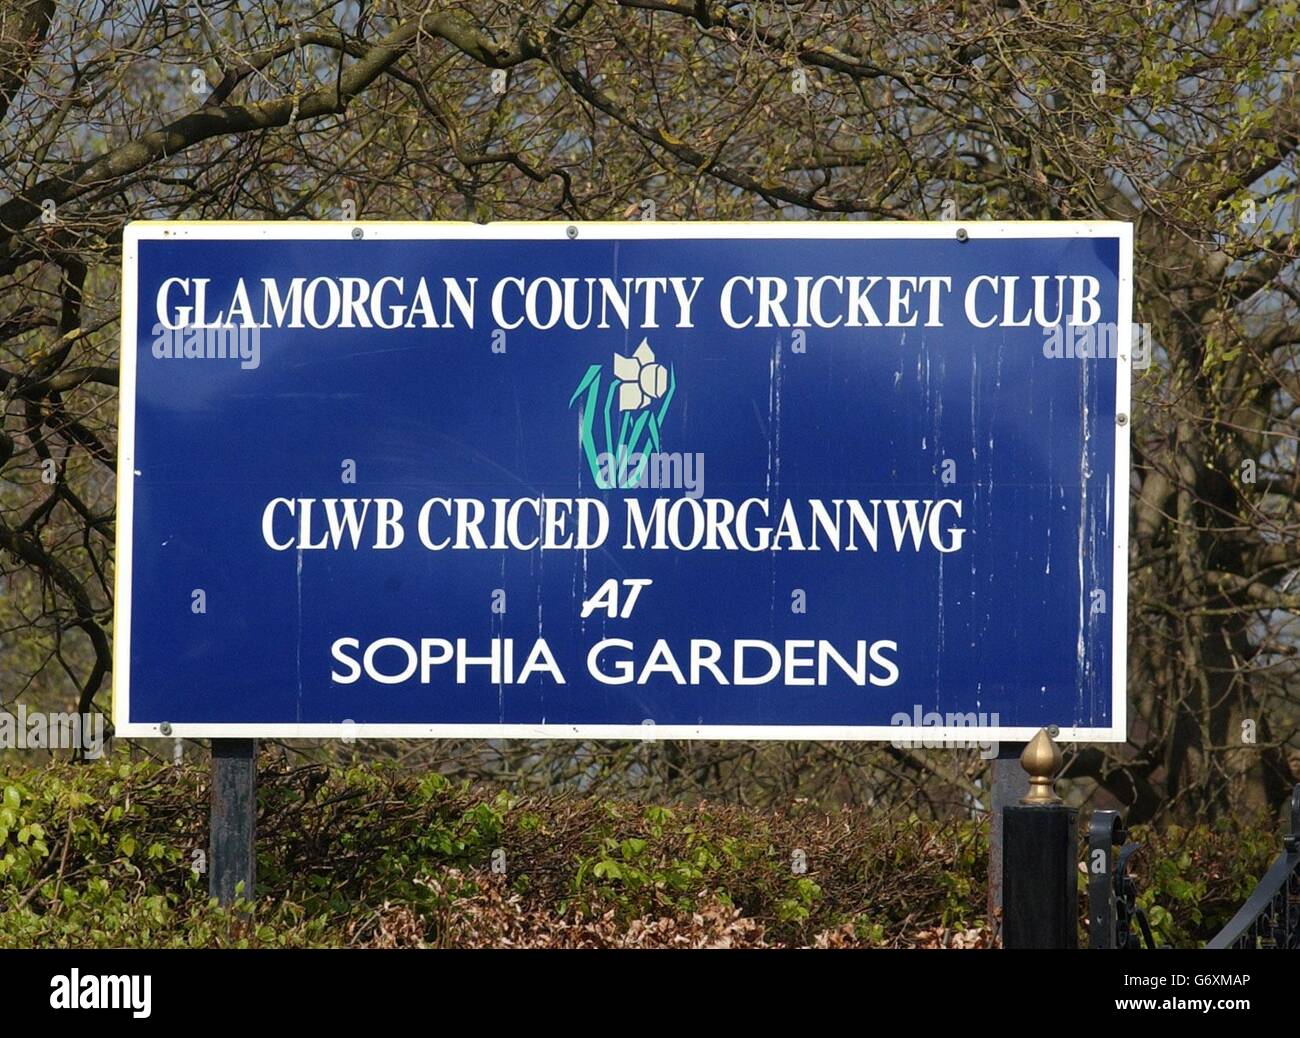 Glamorgan Cricket team. Stock picture of Glamorgan County Cricket club at the start of the 2004 cricket season. Stock Photo